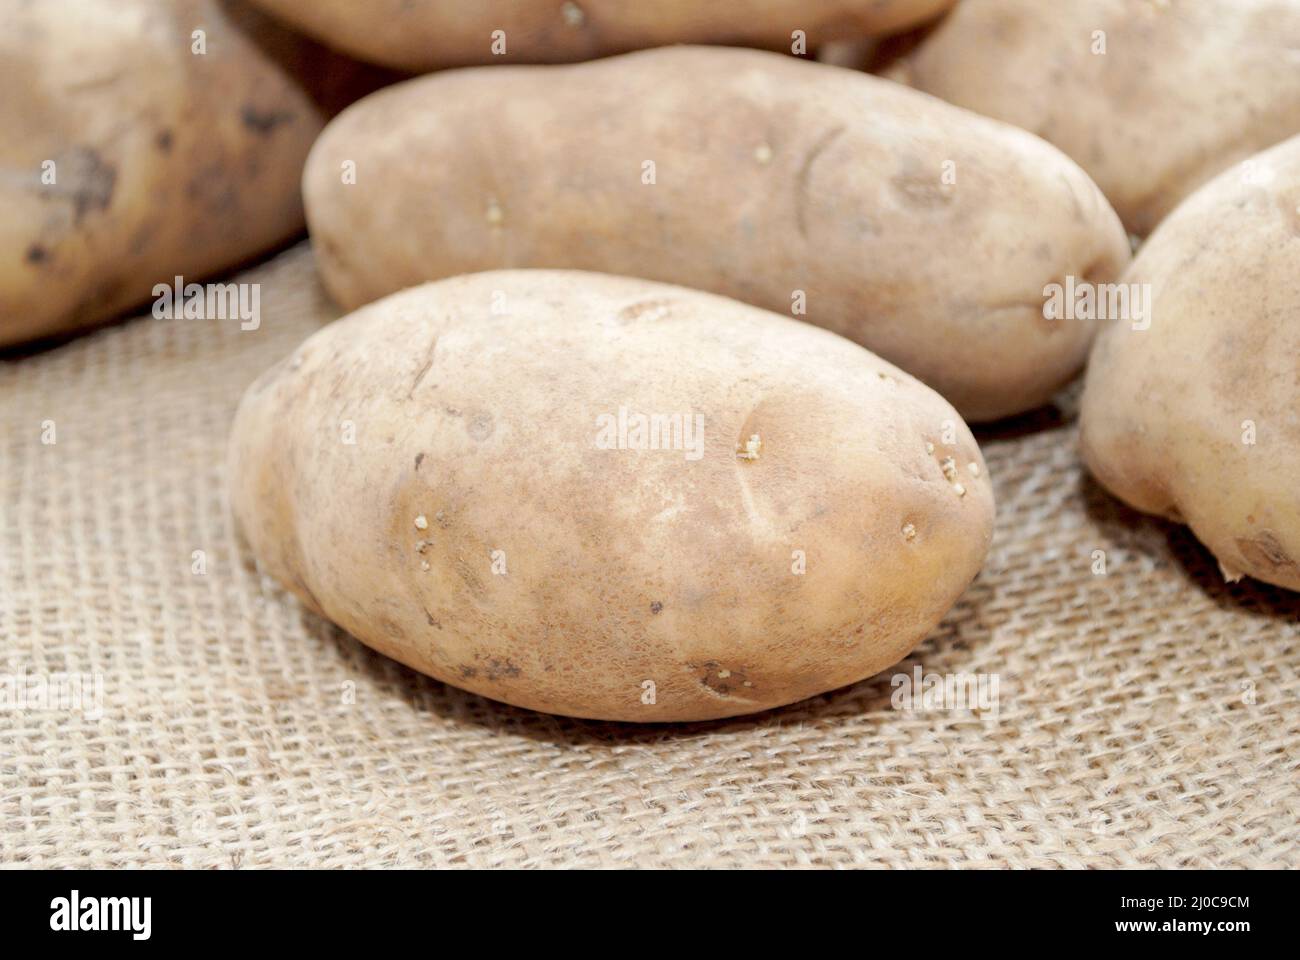 Fresh Harvested White Potatoes on Burlap Stock Photo